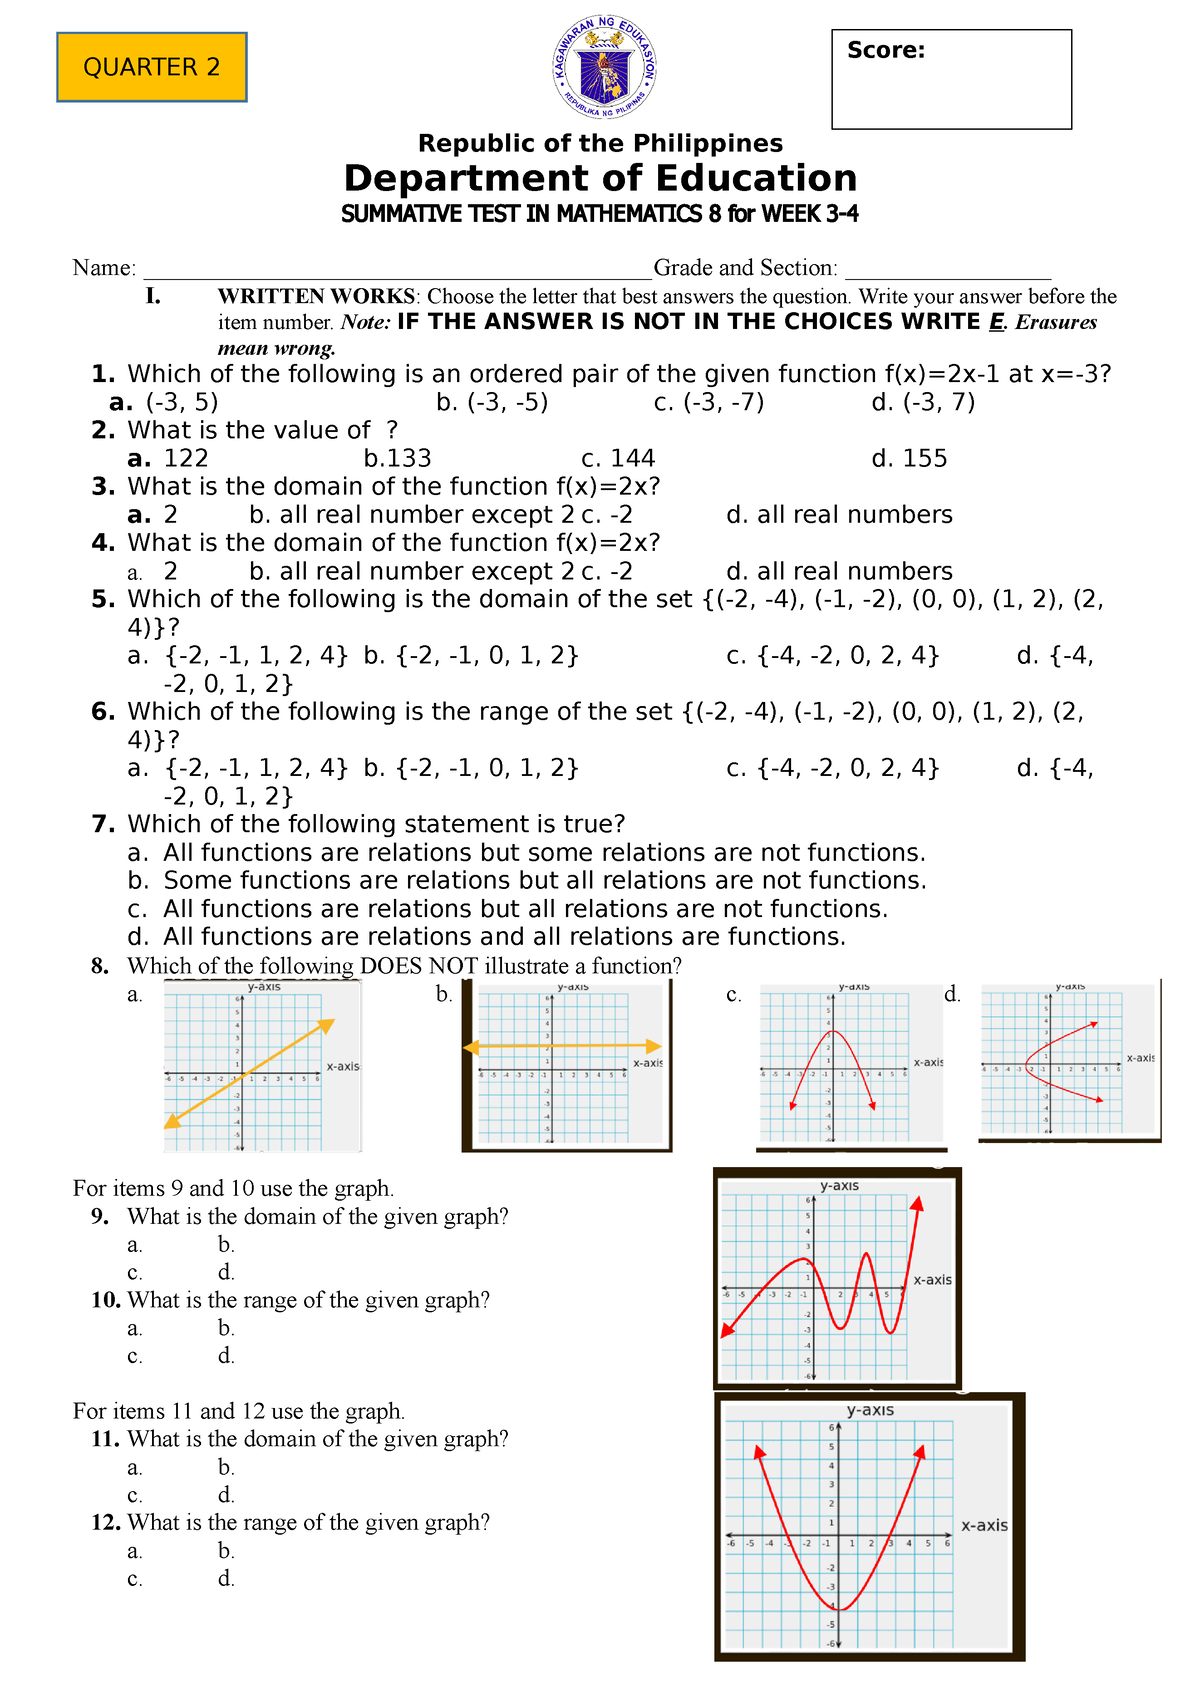 Q2 Summative Test Math 8 W3 4 Republic Of The Philippines Department Of Education Summative 5619